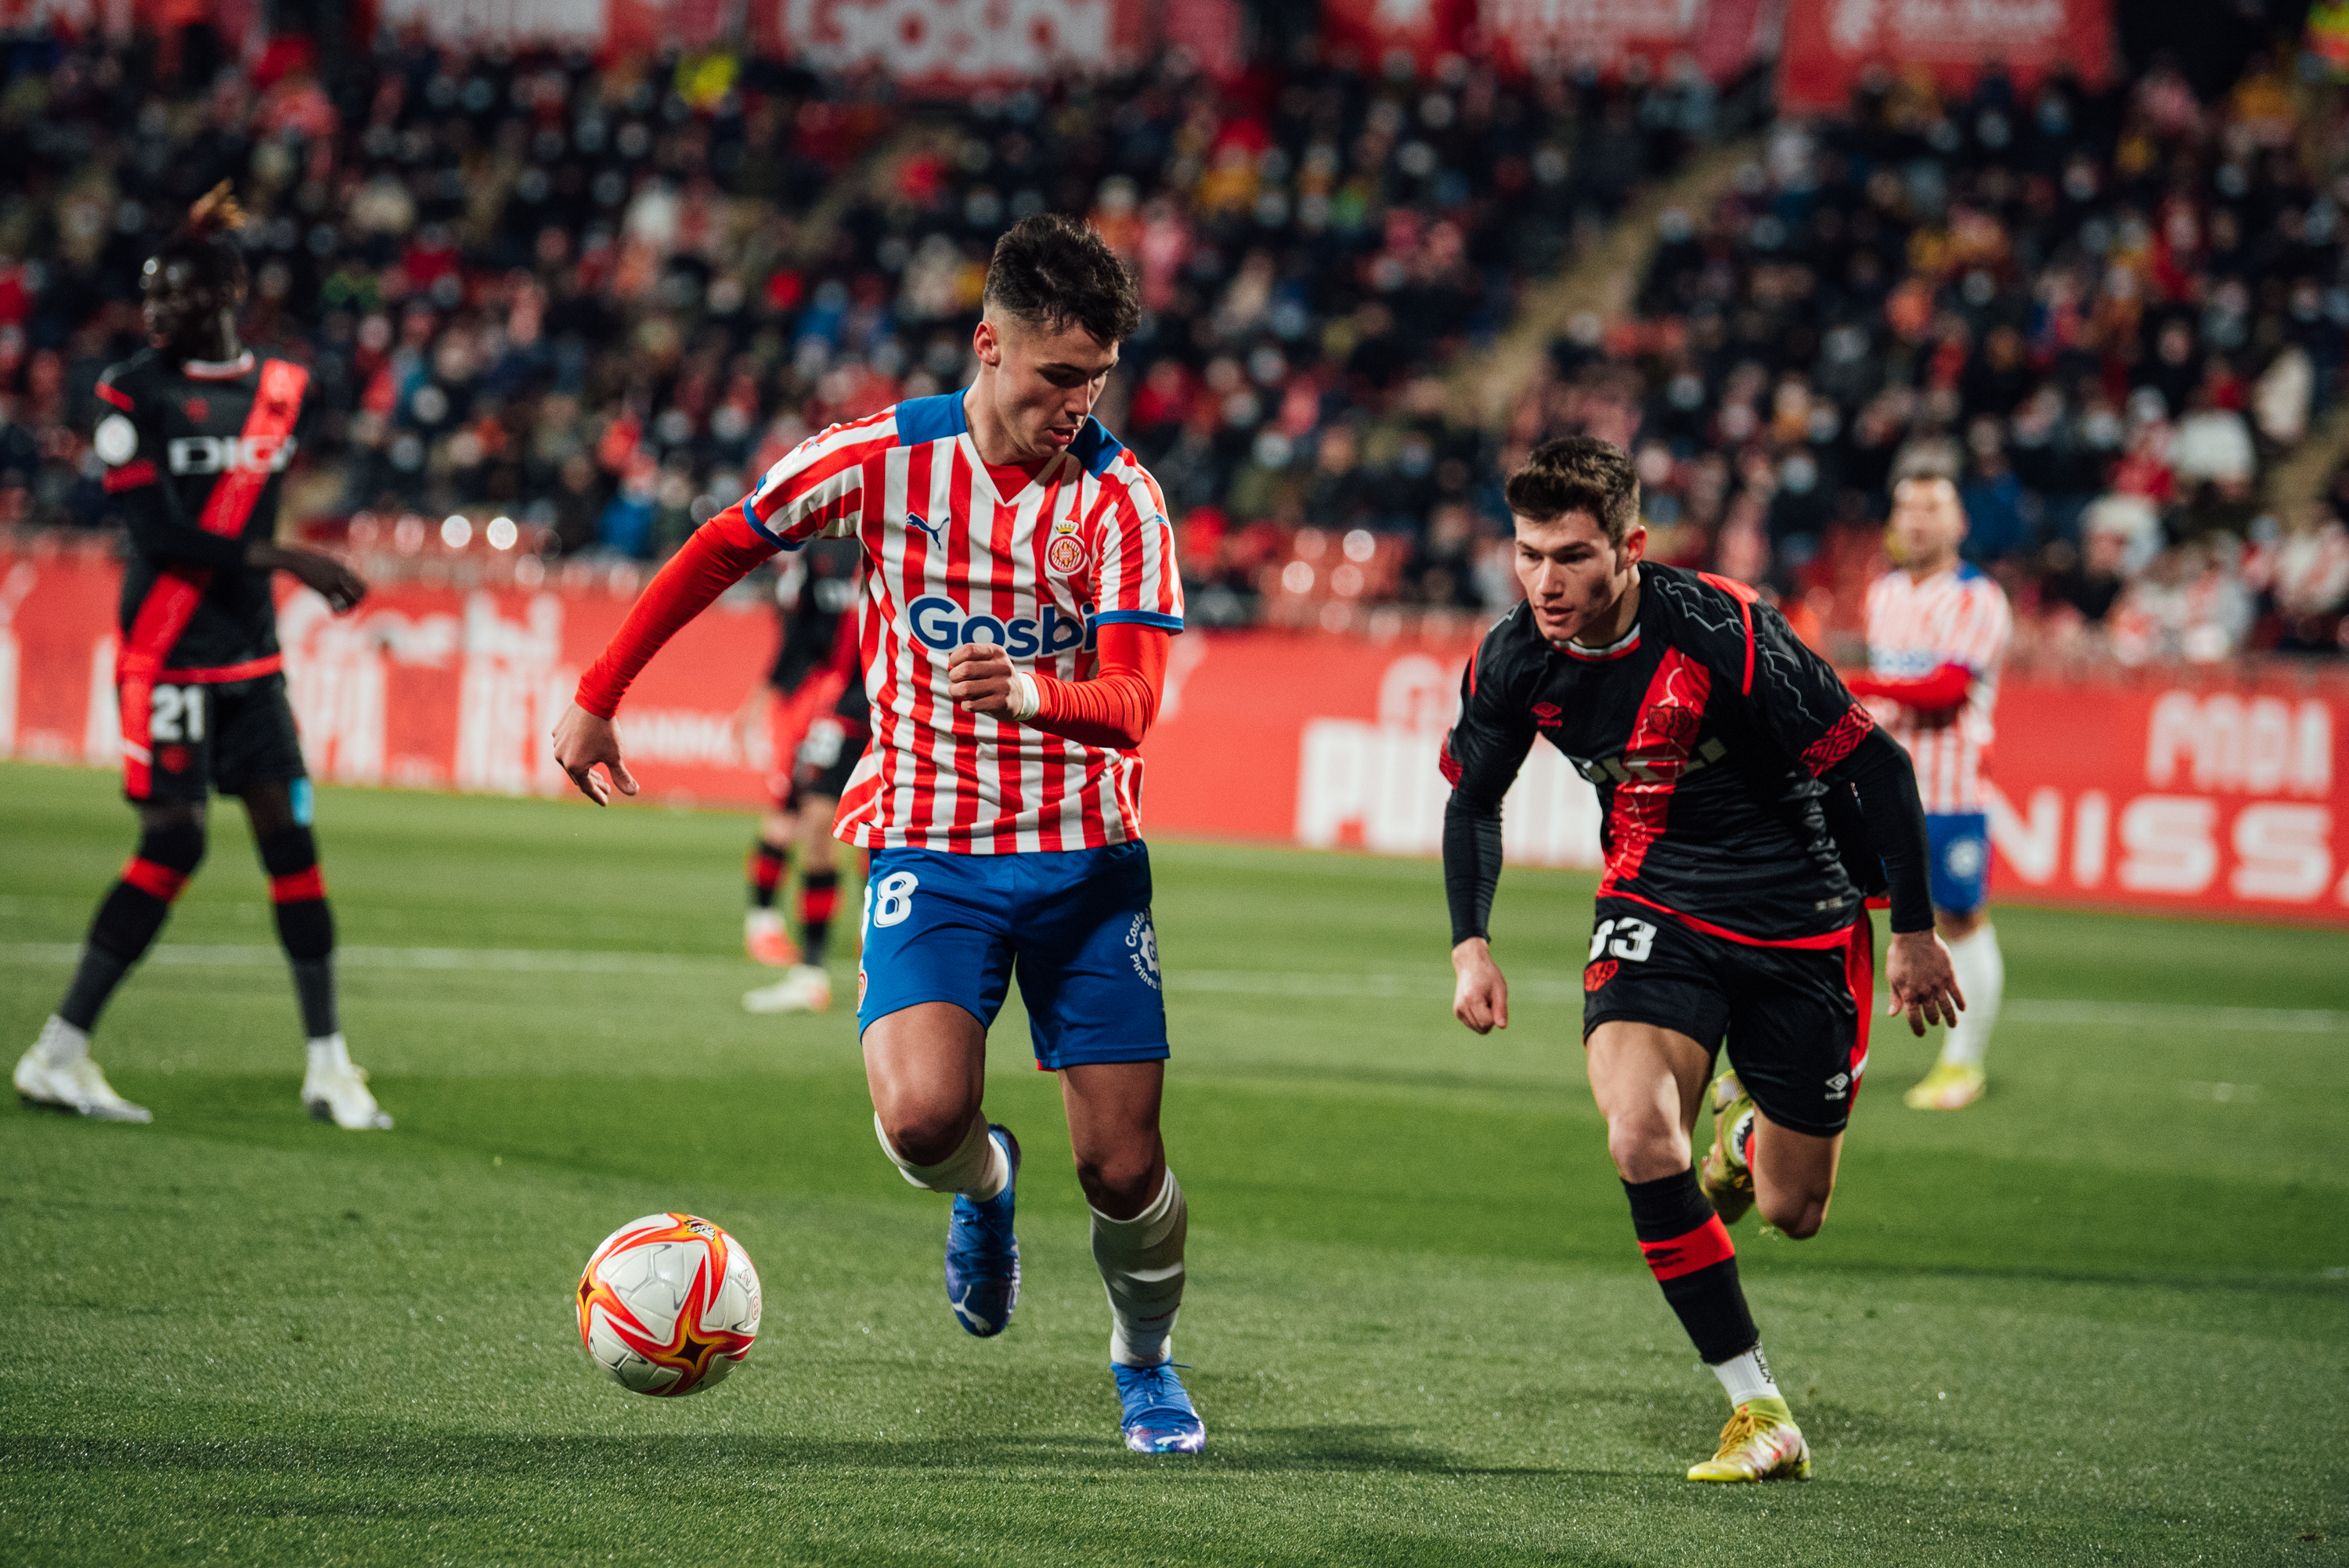 FOTO: Nuri Marguí, Girona FC